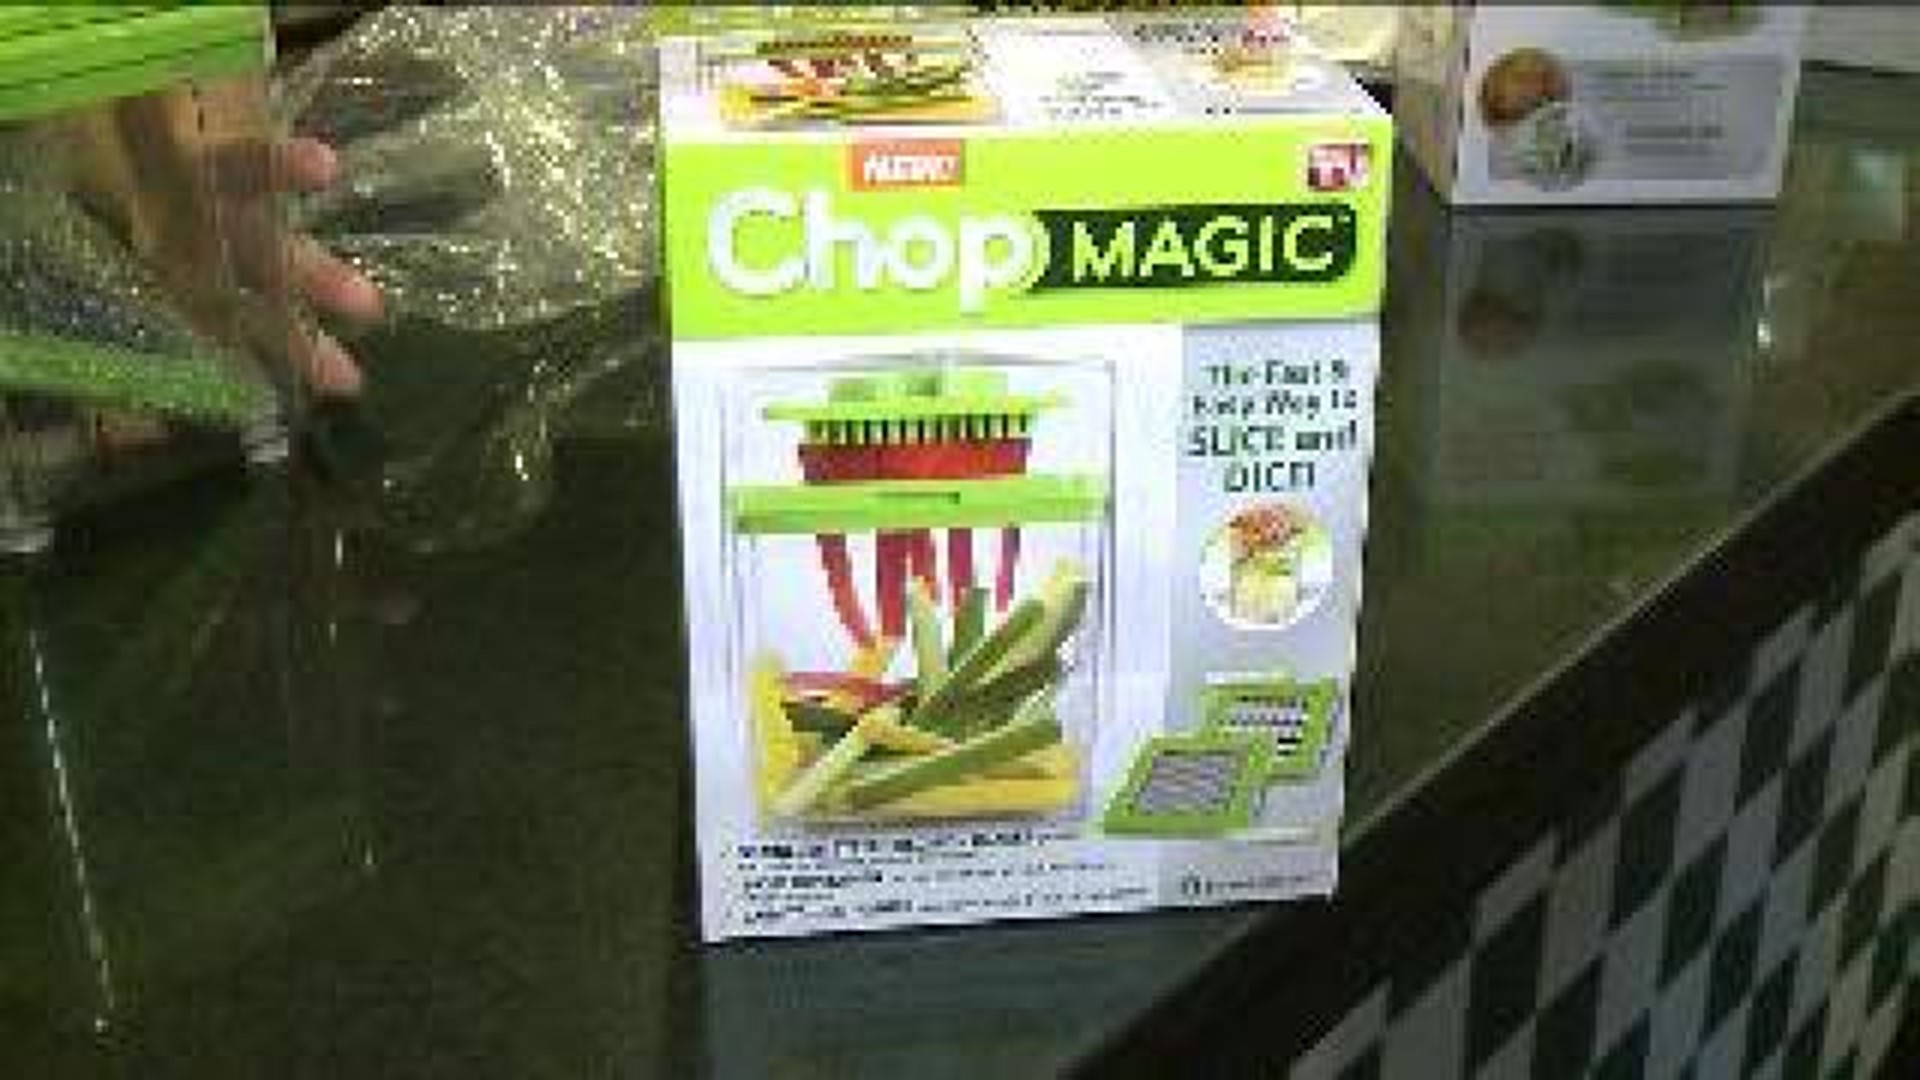 Chop Magic